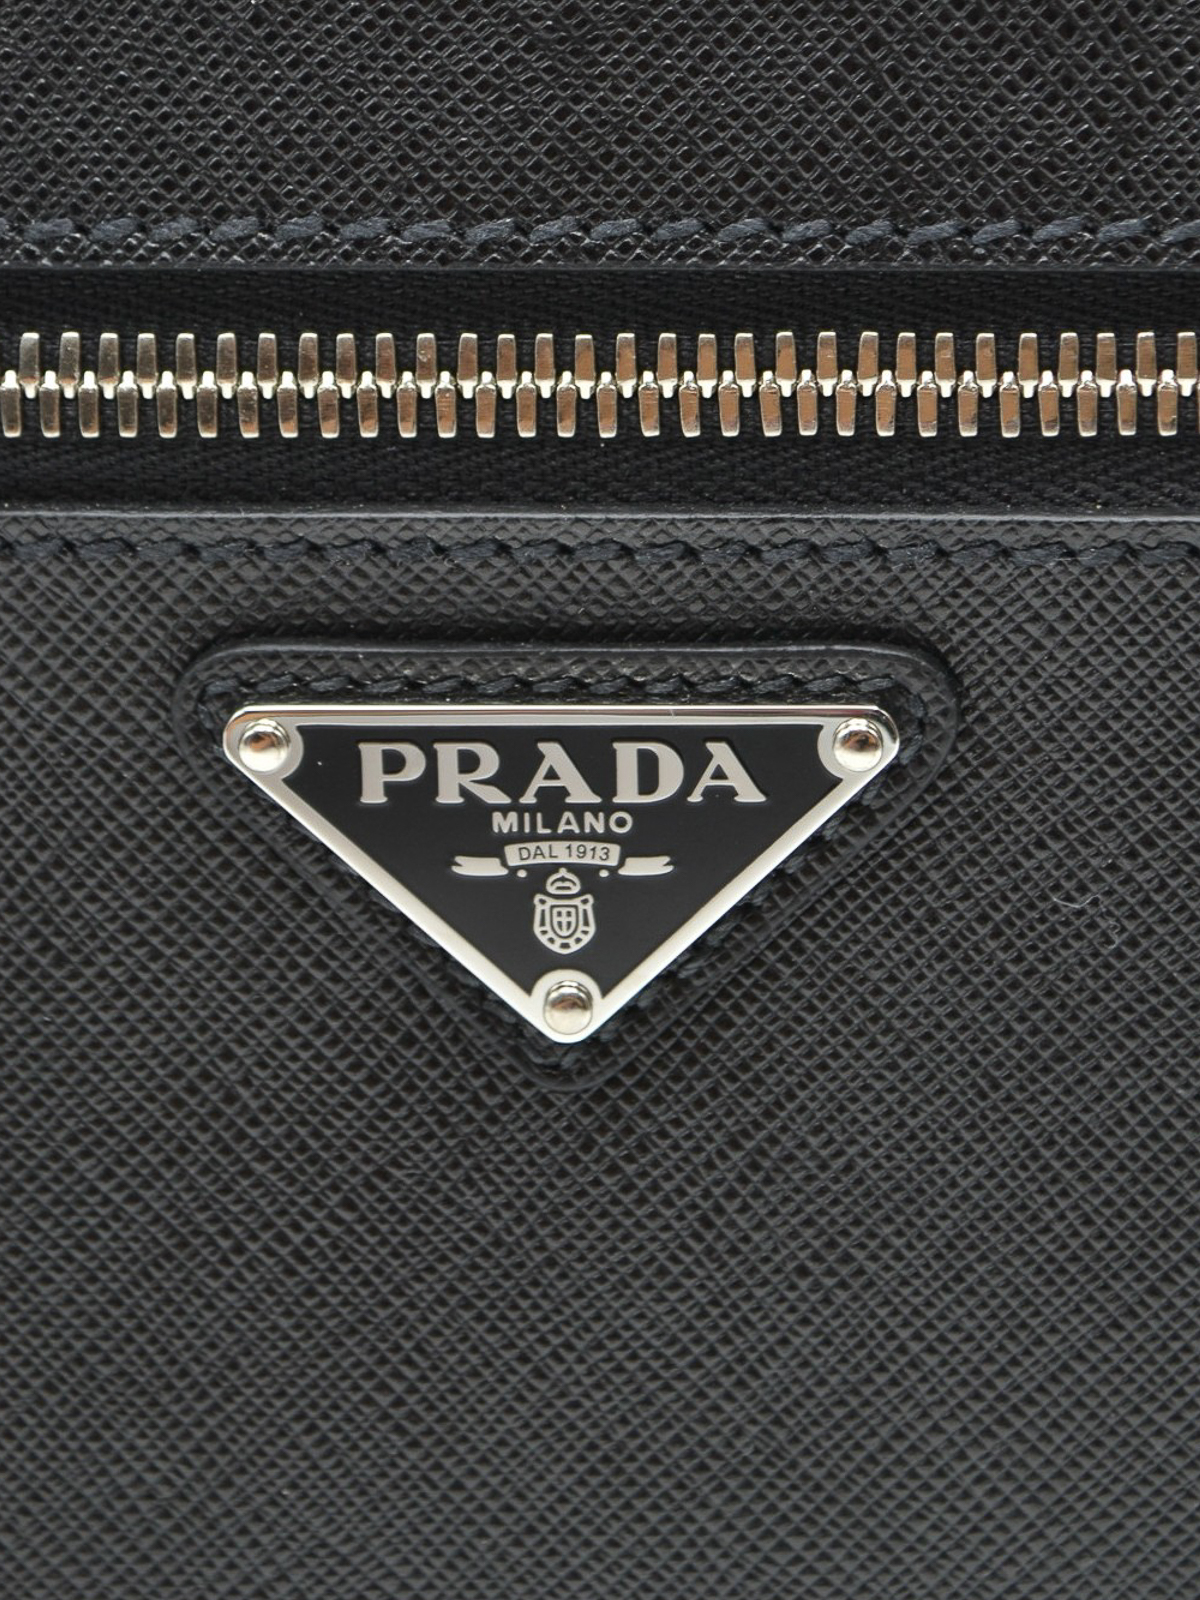 Laptop bags & briefcases Prada - Saffiano leather briefcase - 2VE3682FAD002